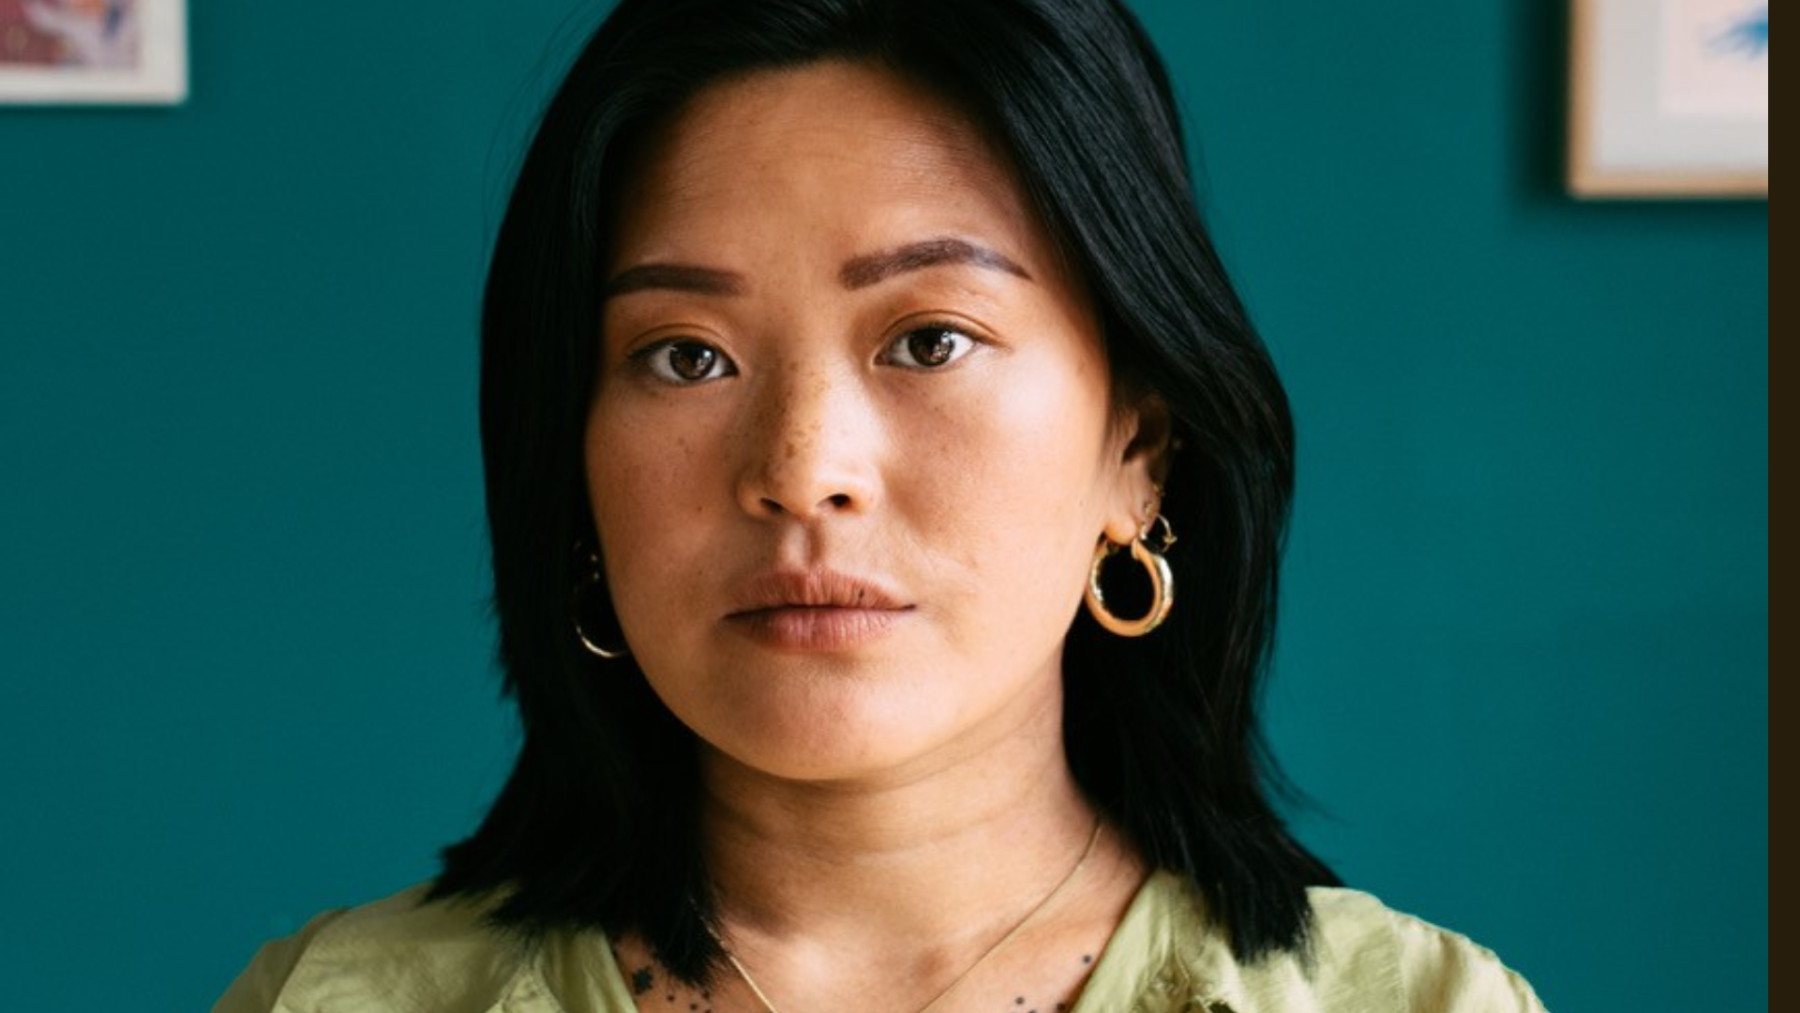 Sioejeng is illustrator en uitgesproken activiste